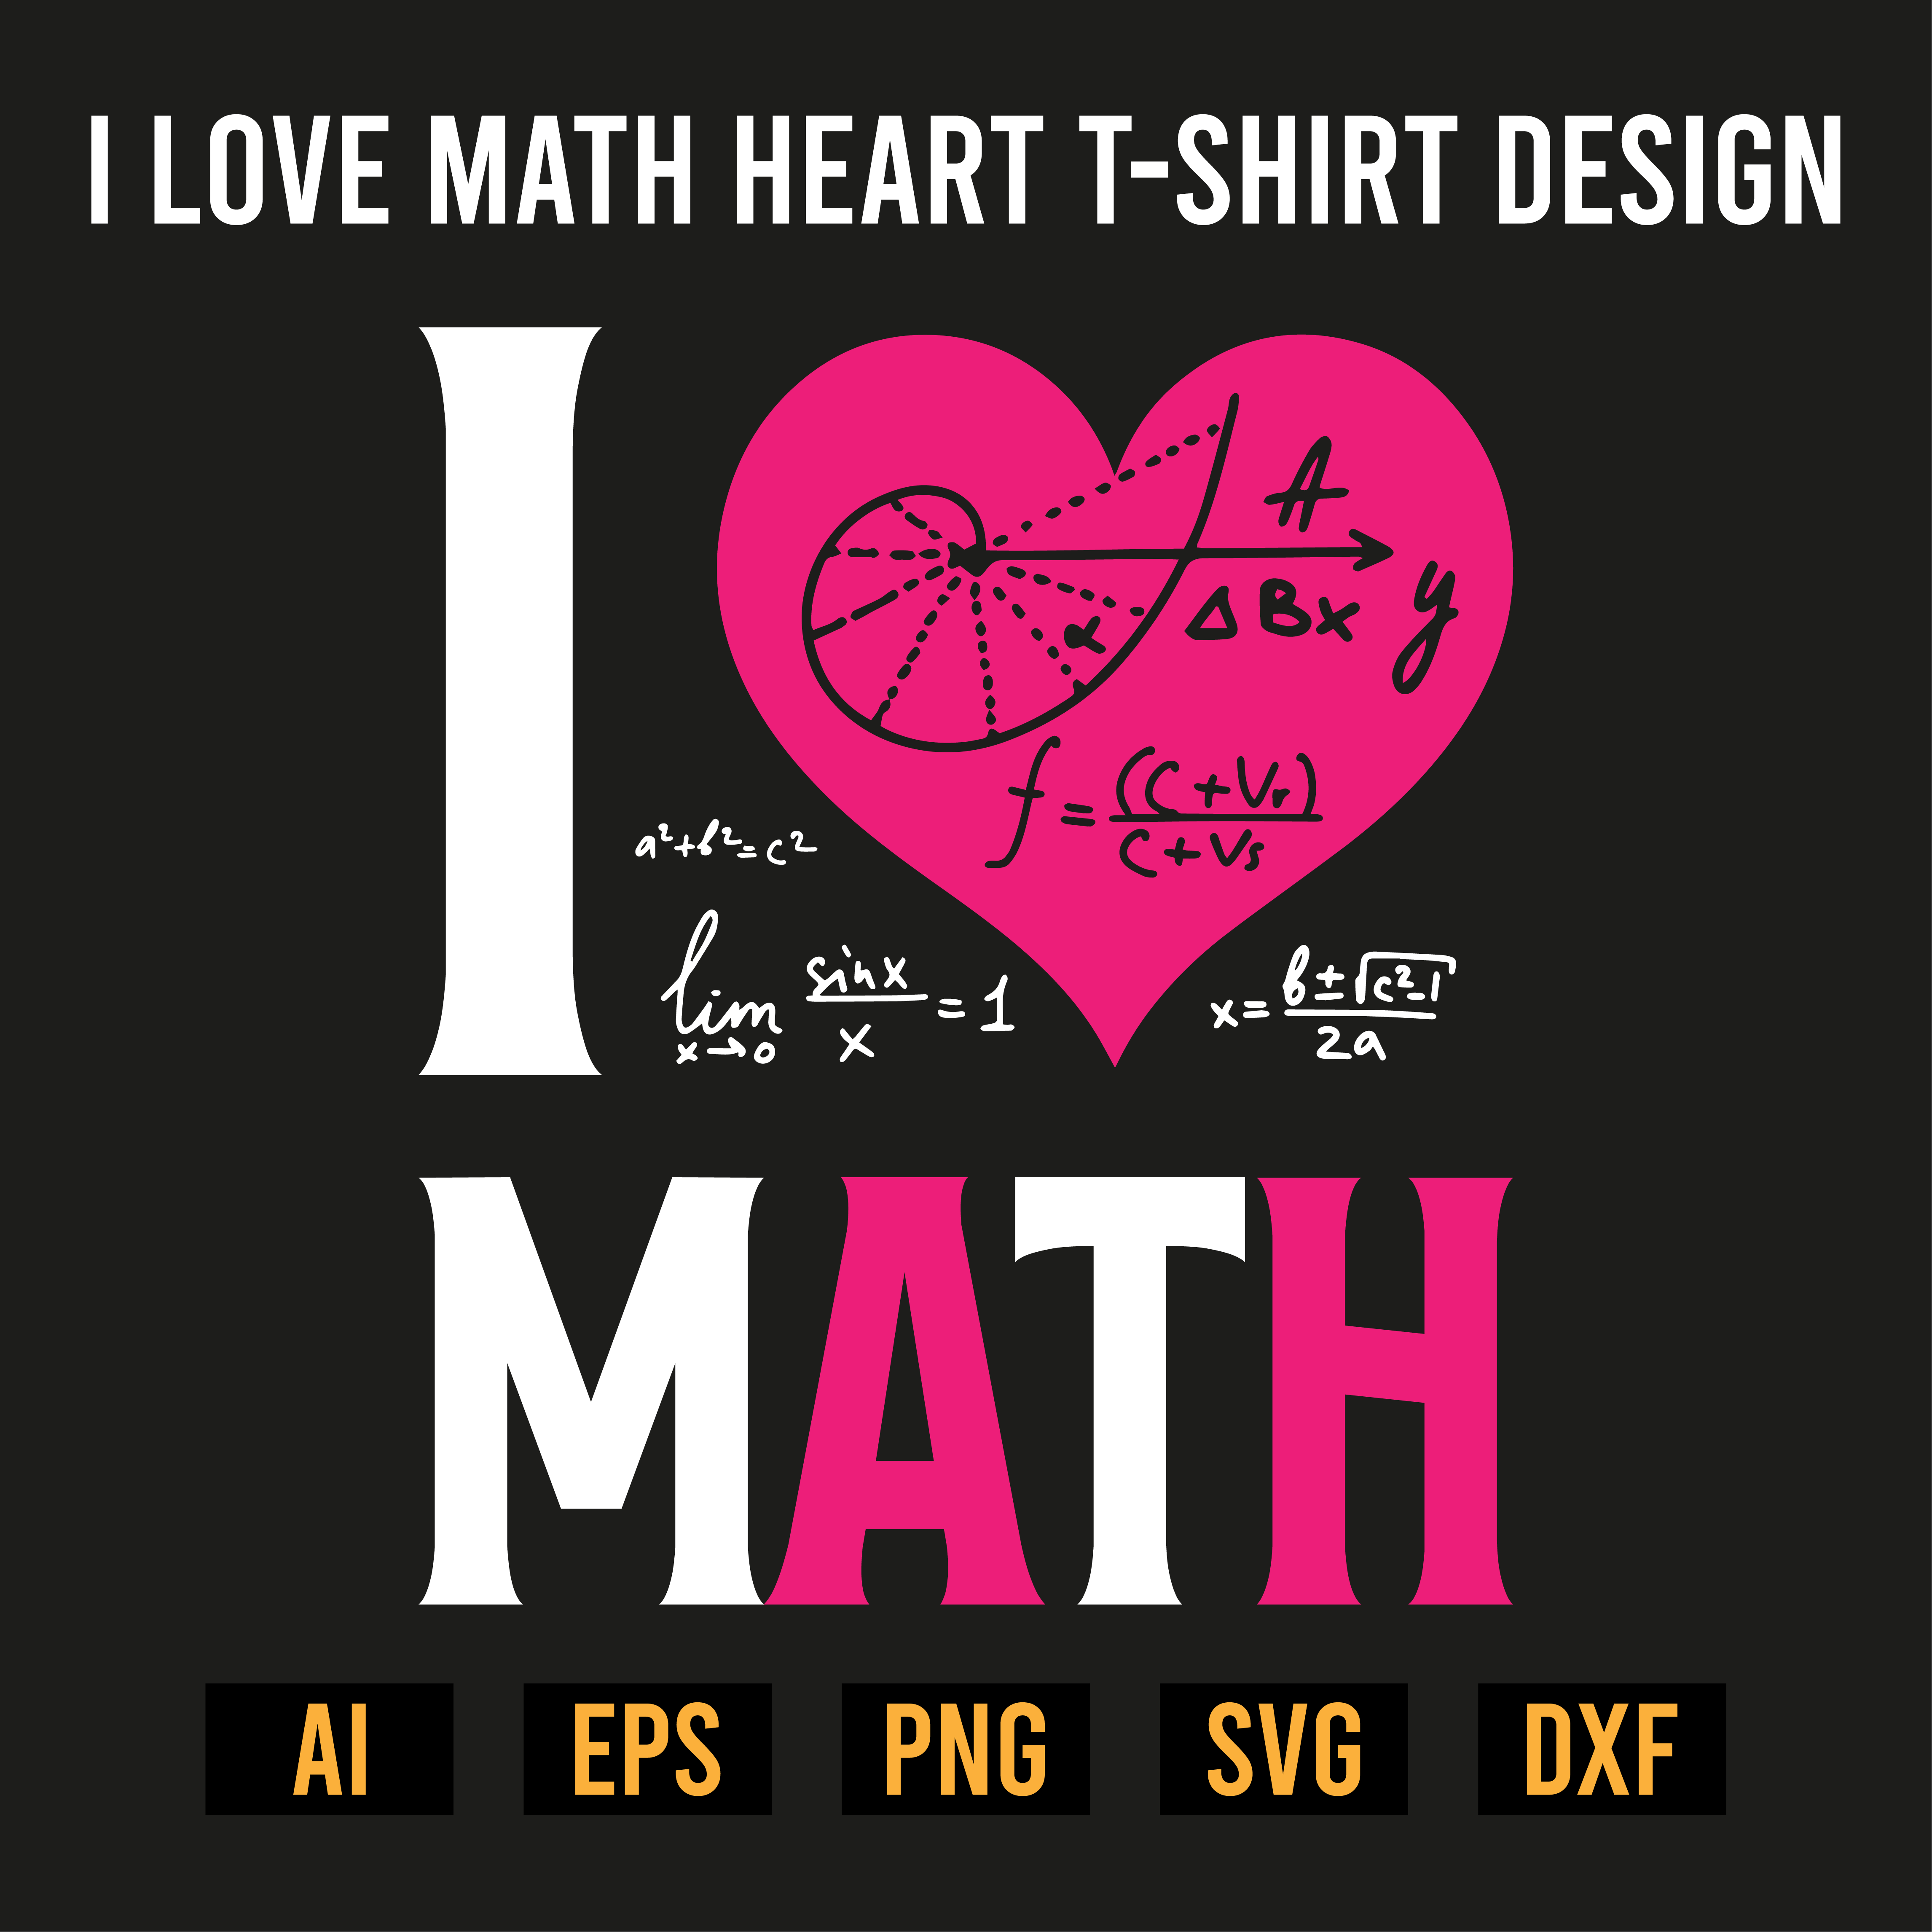 I Love Math Heart T-Shirt Design cover image.